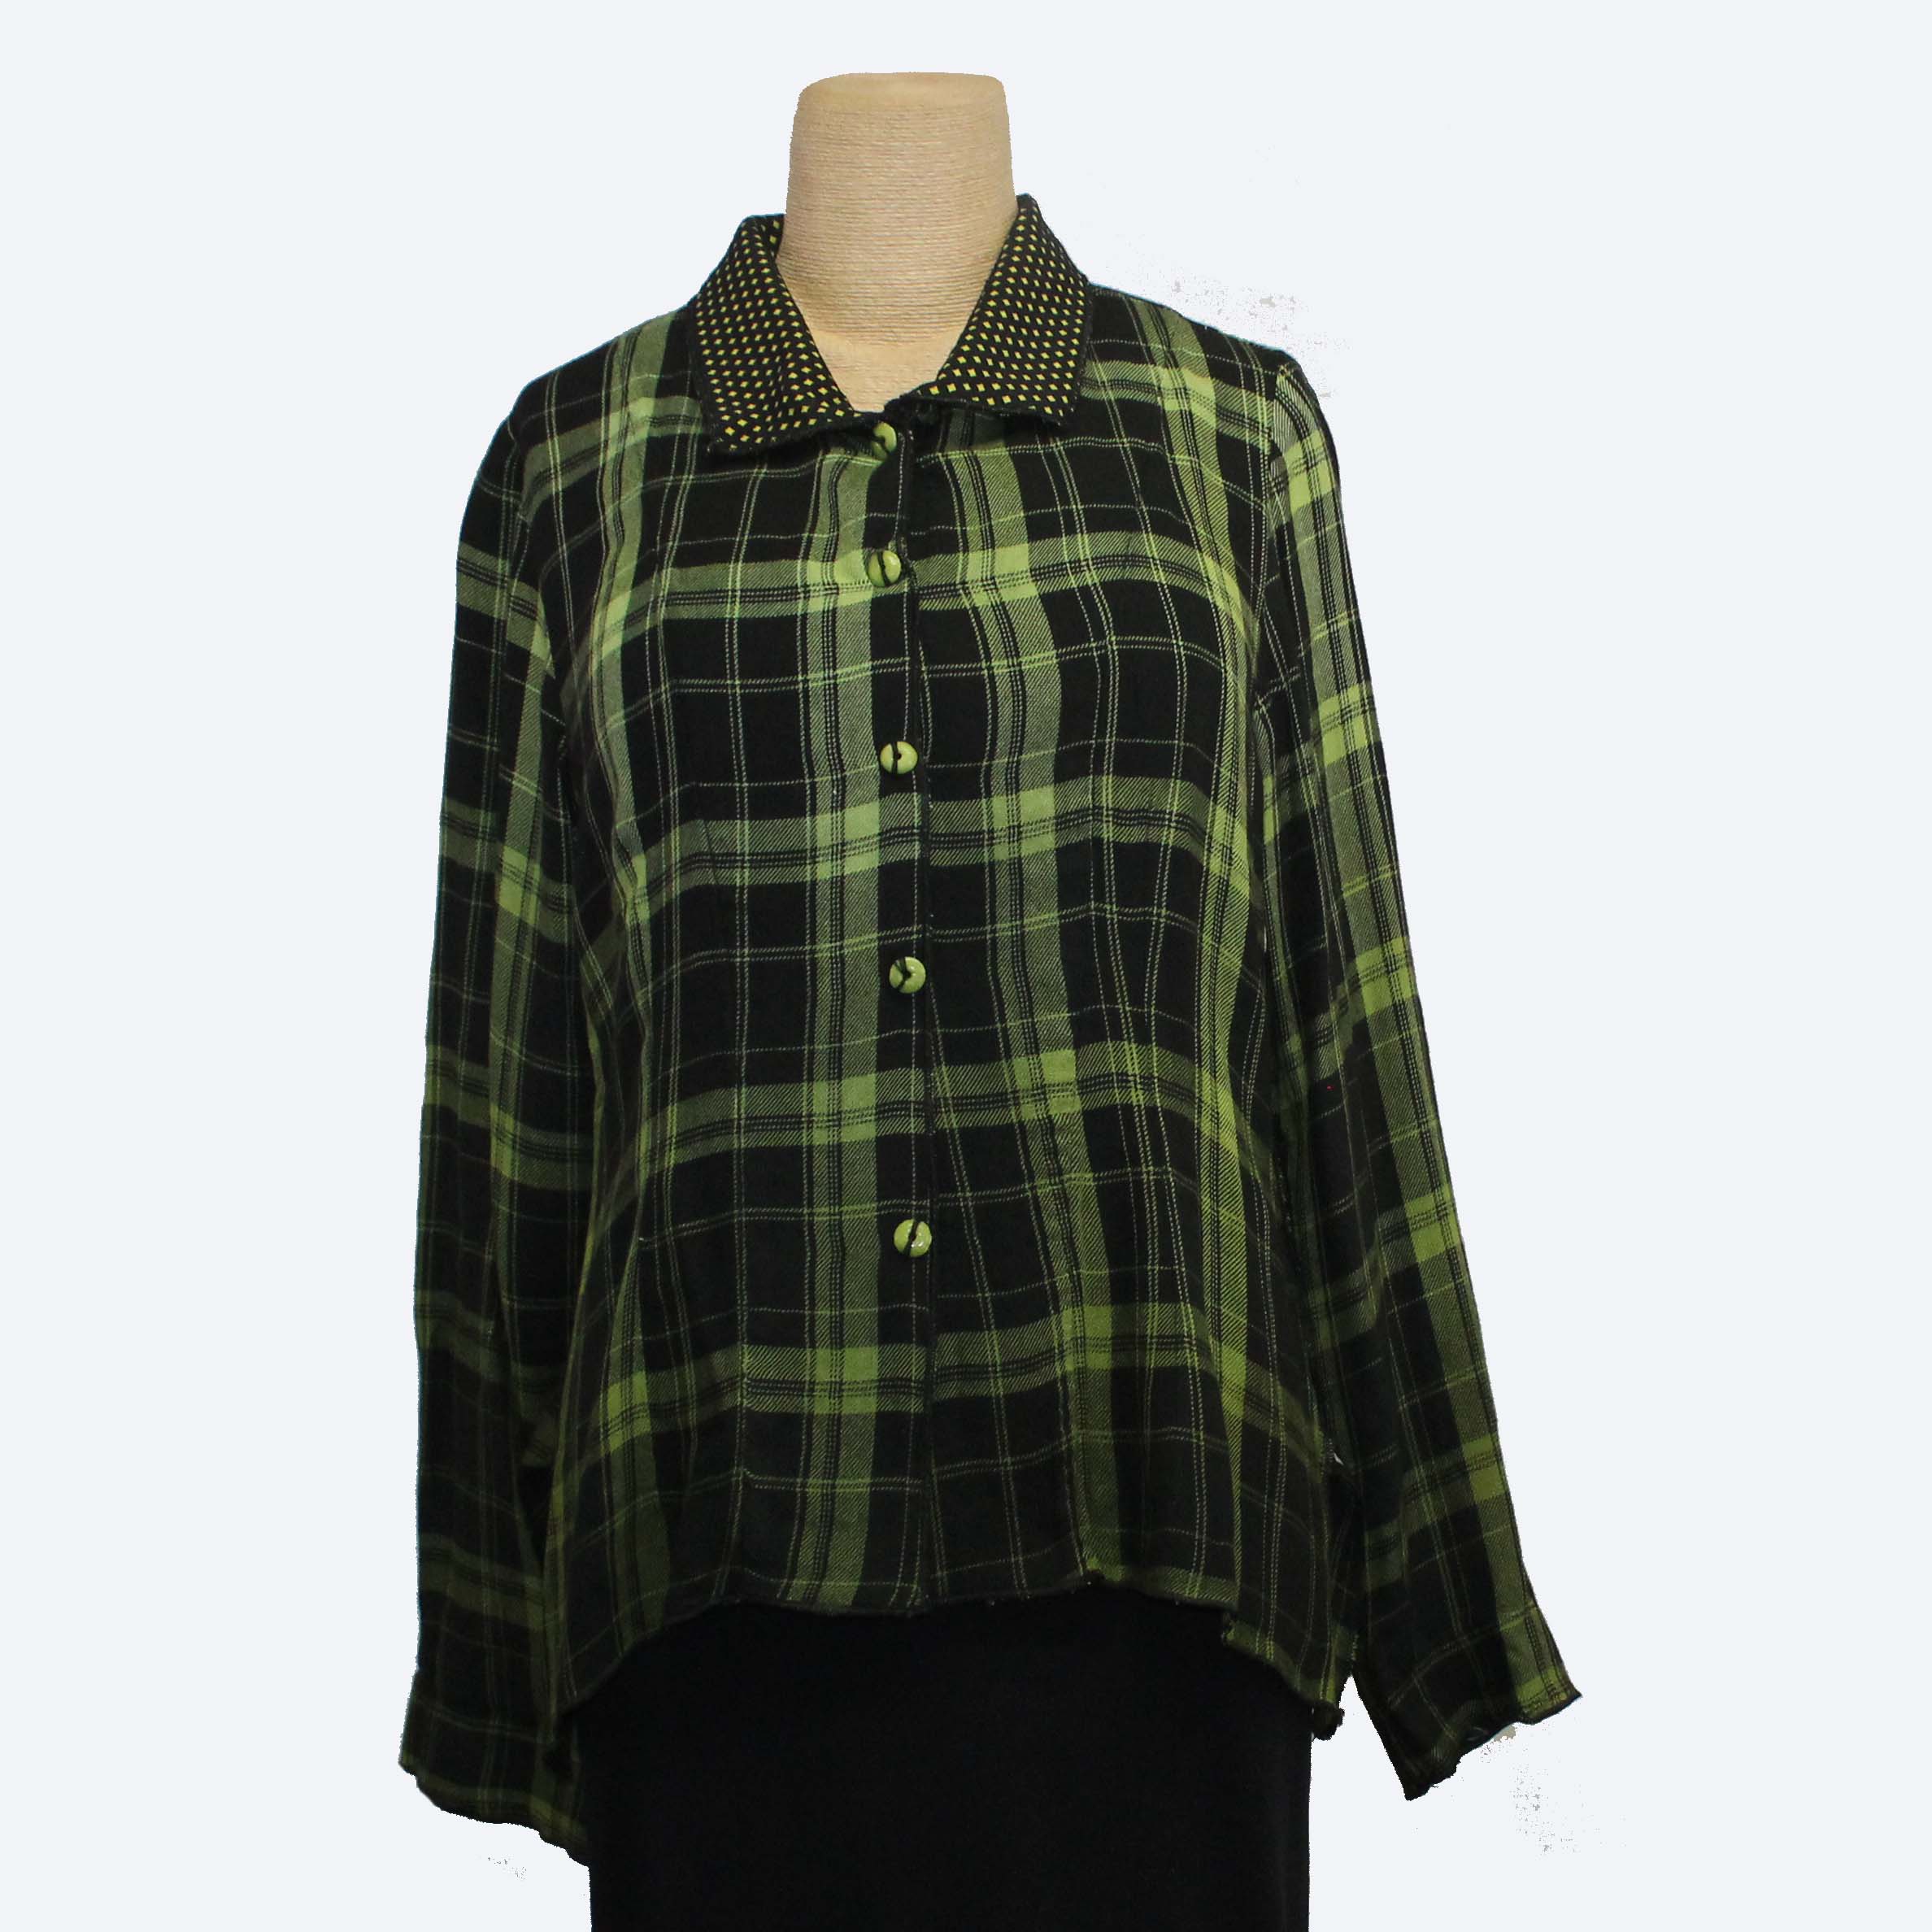 Deborah Cross Shirt, Lime Green/Black Plaid, XS